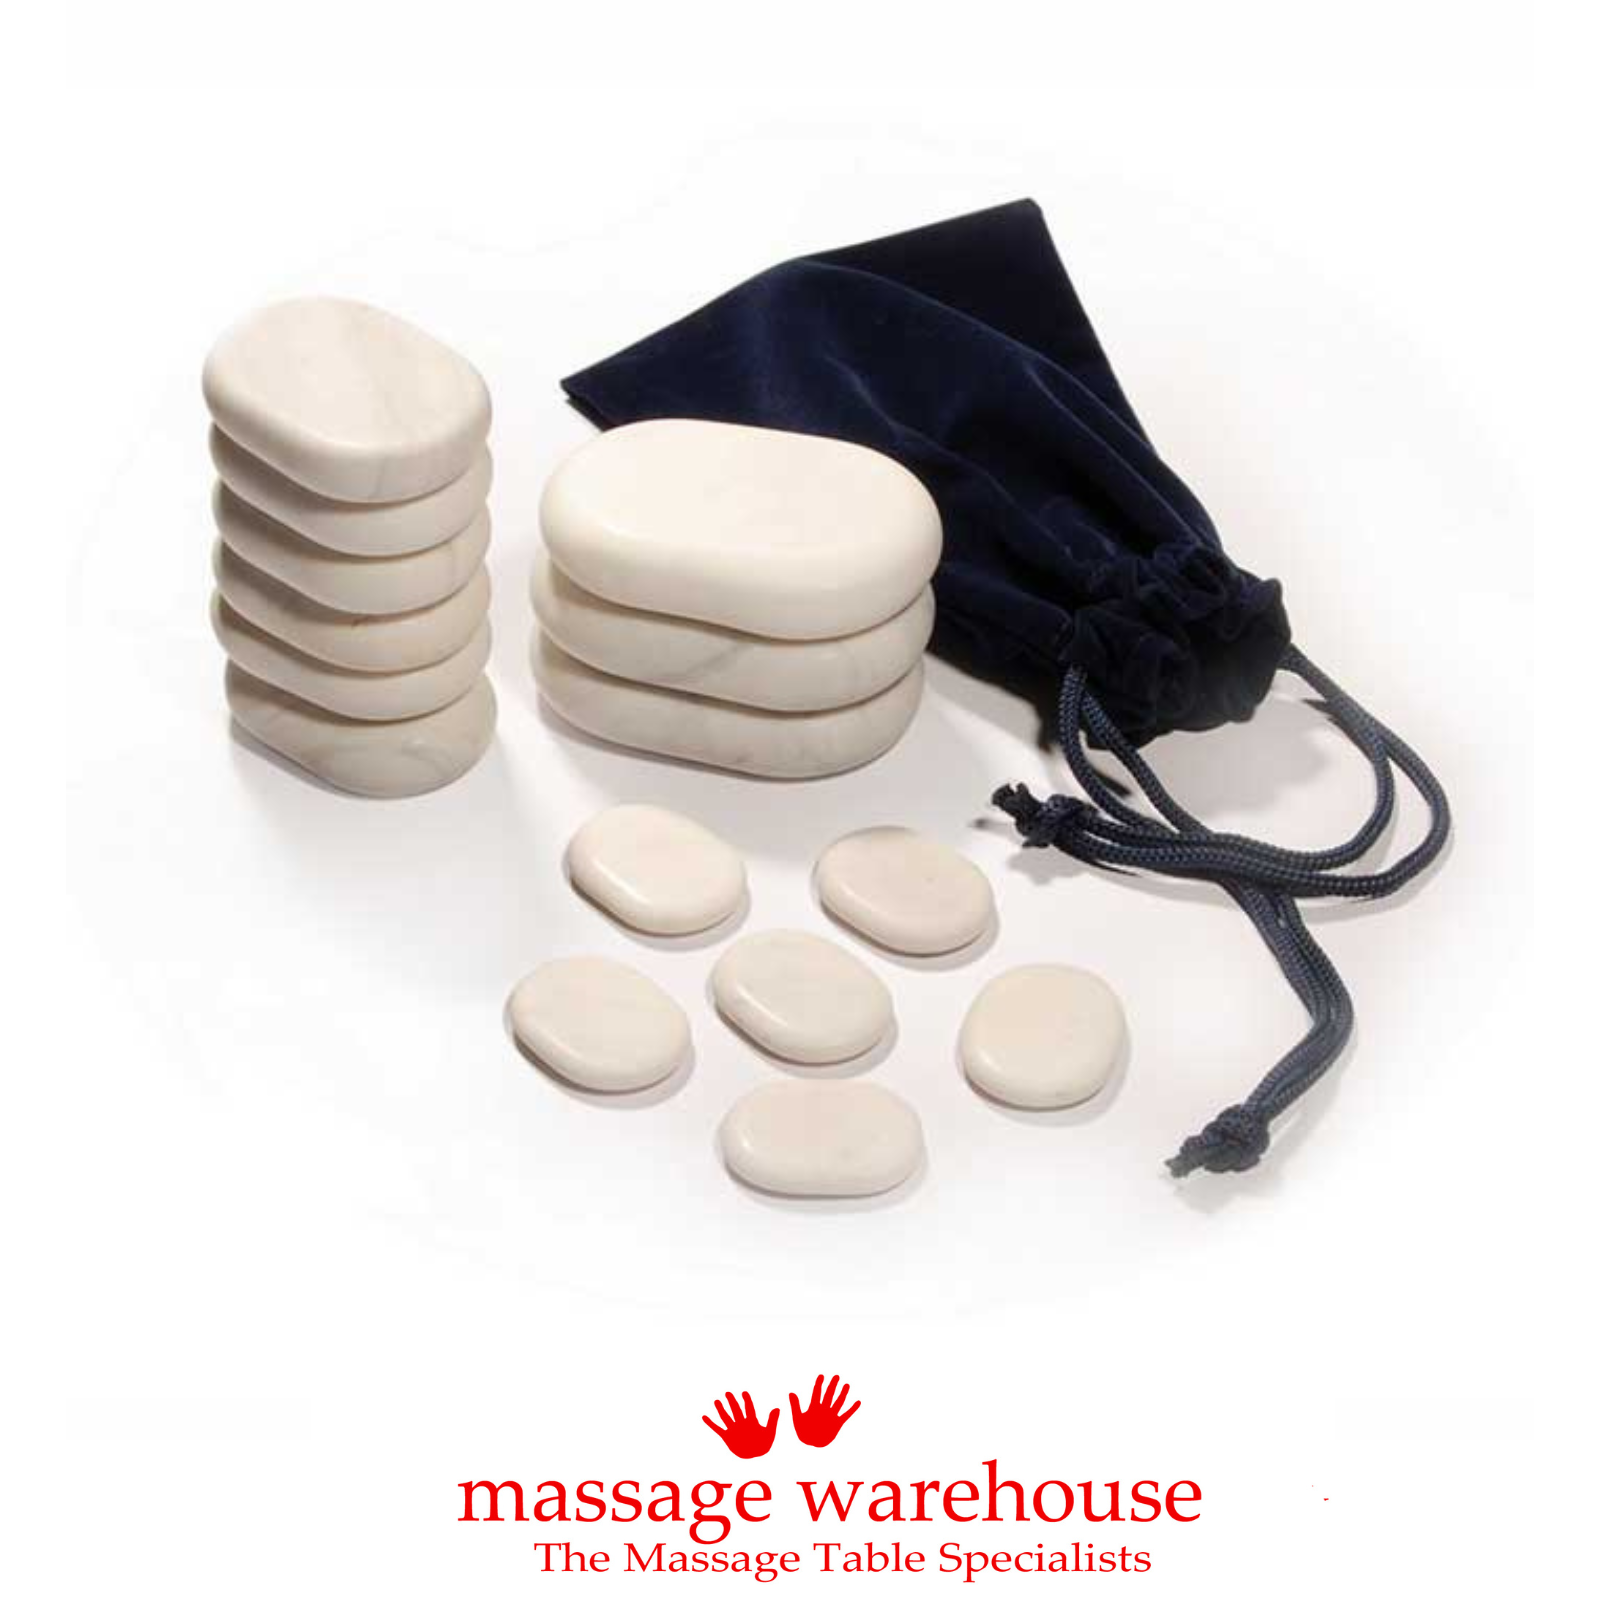 15 Piece Cold Marble Stone Set Massage Warehouse